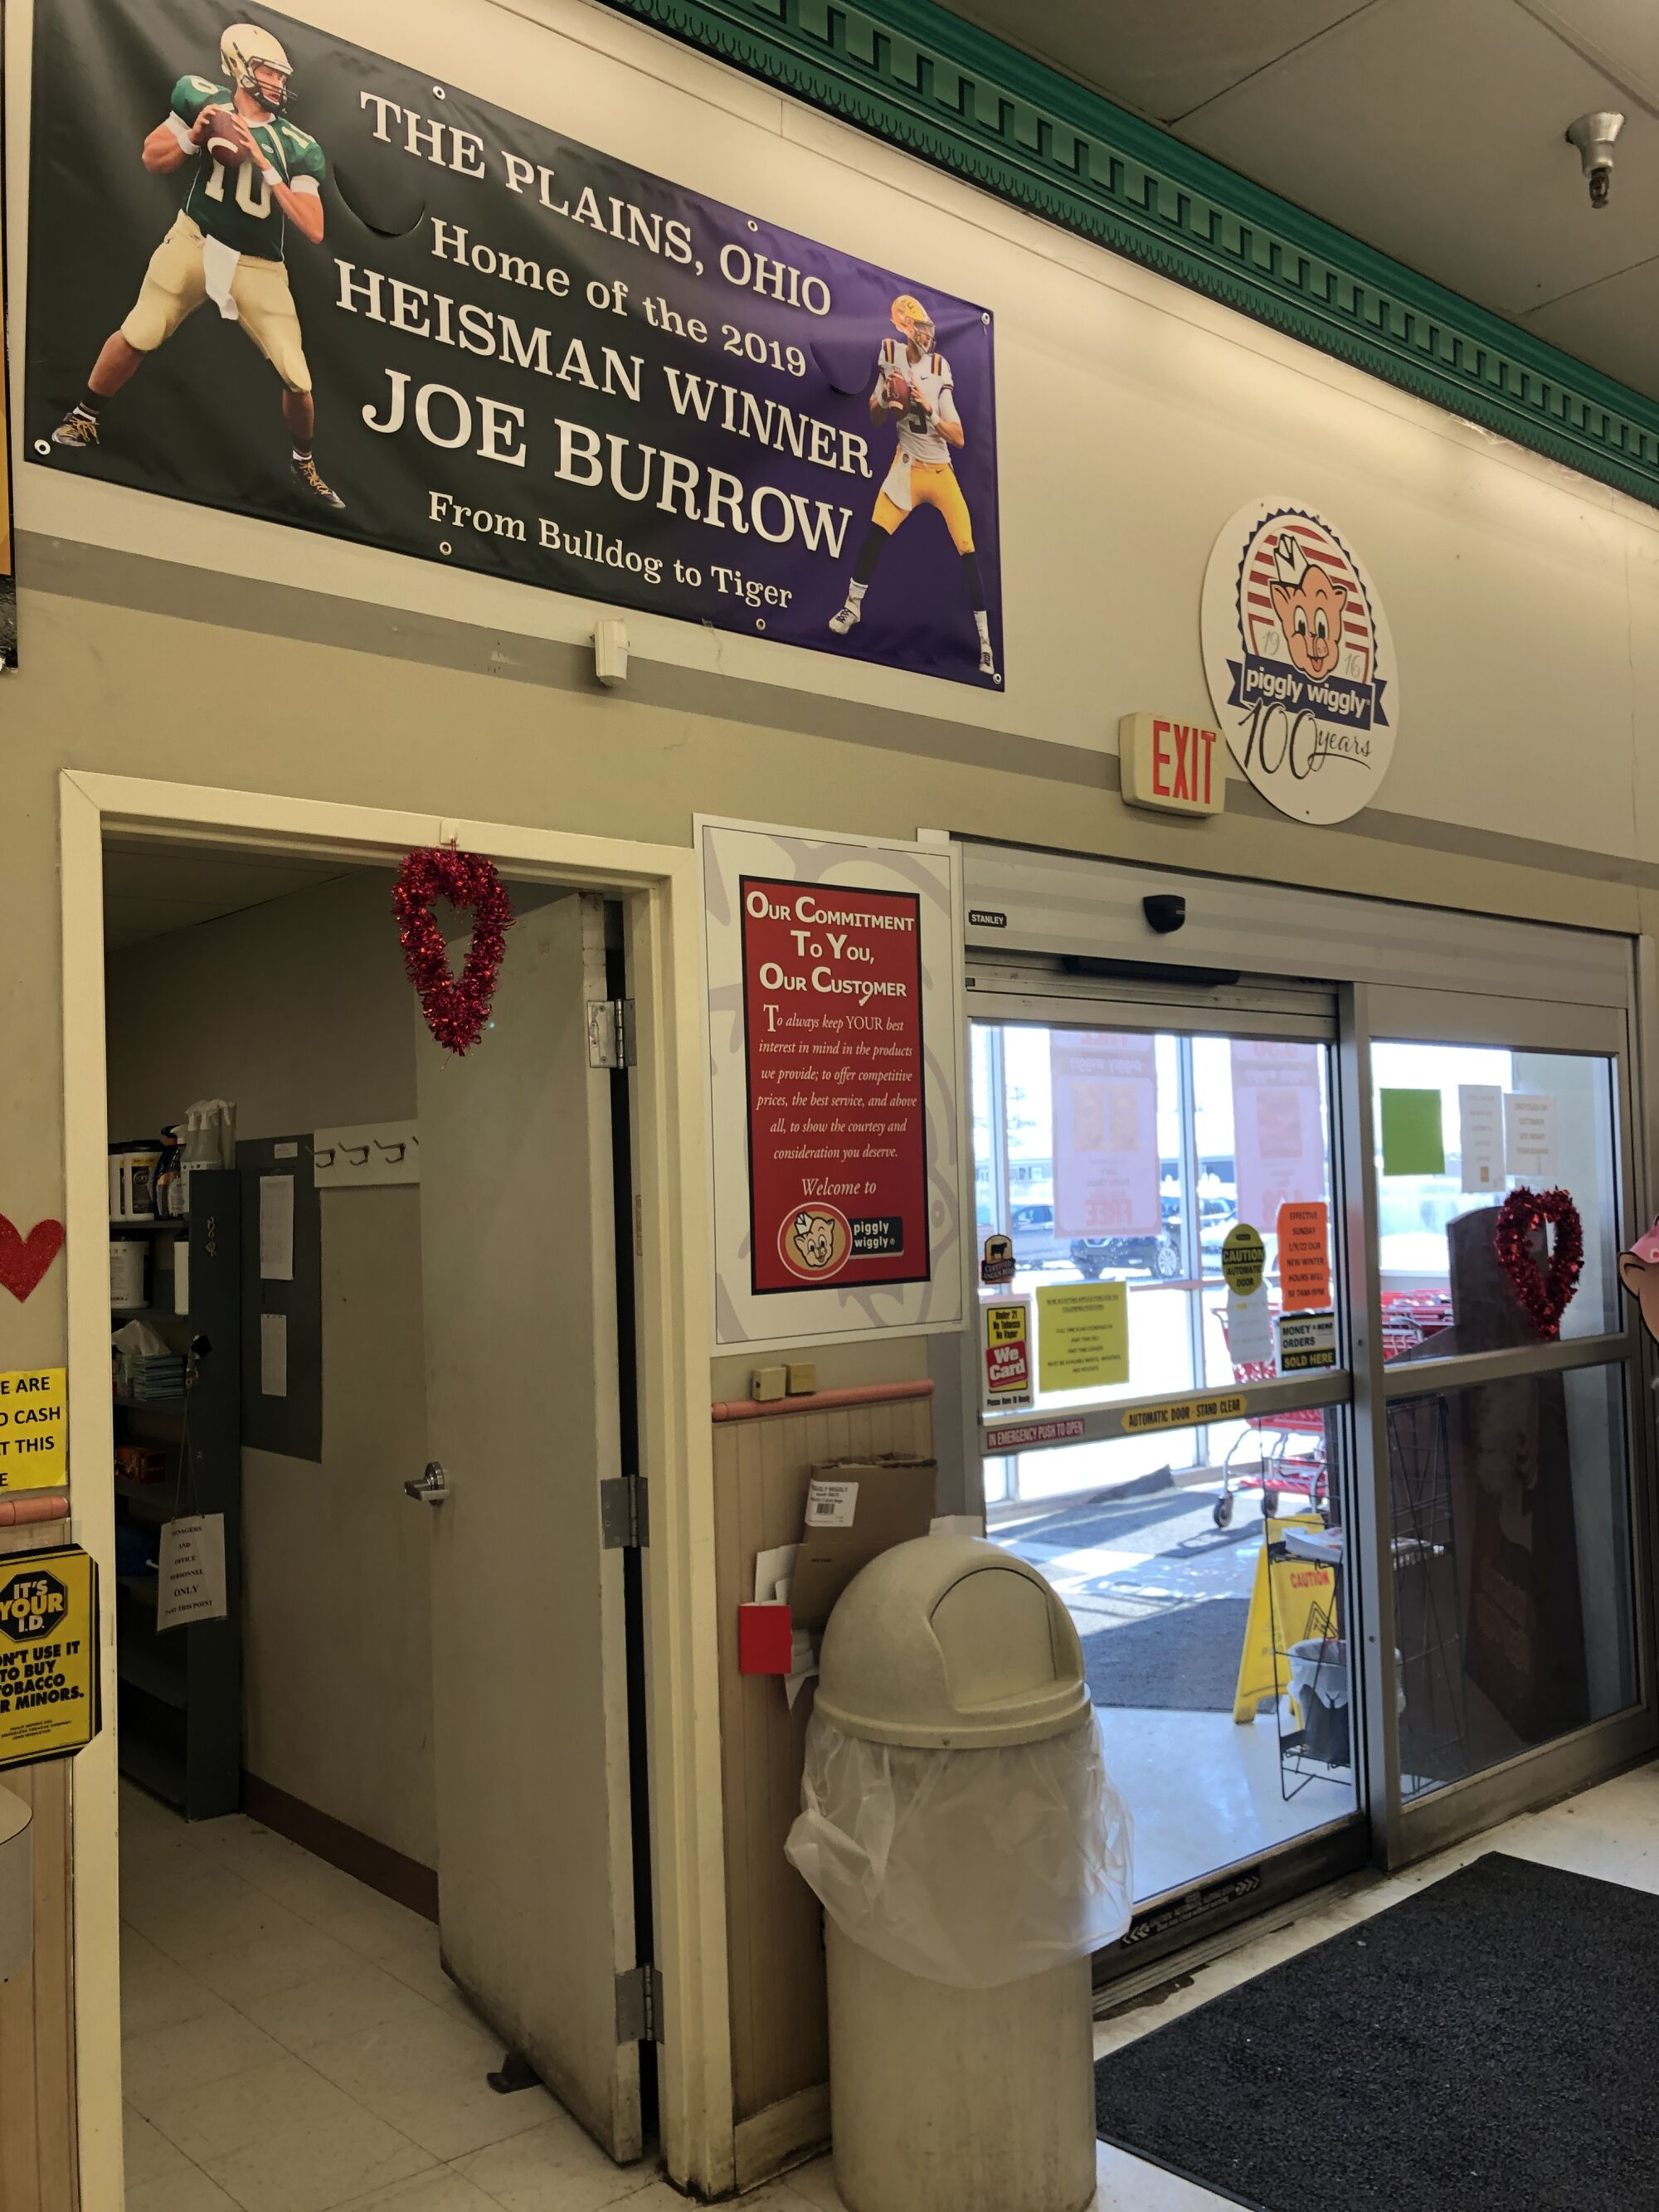 A sign above a grocery store door touts Joe Burrow's Heisman Trophy season 